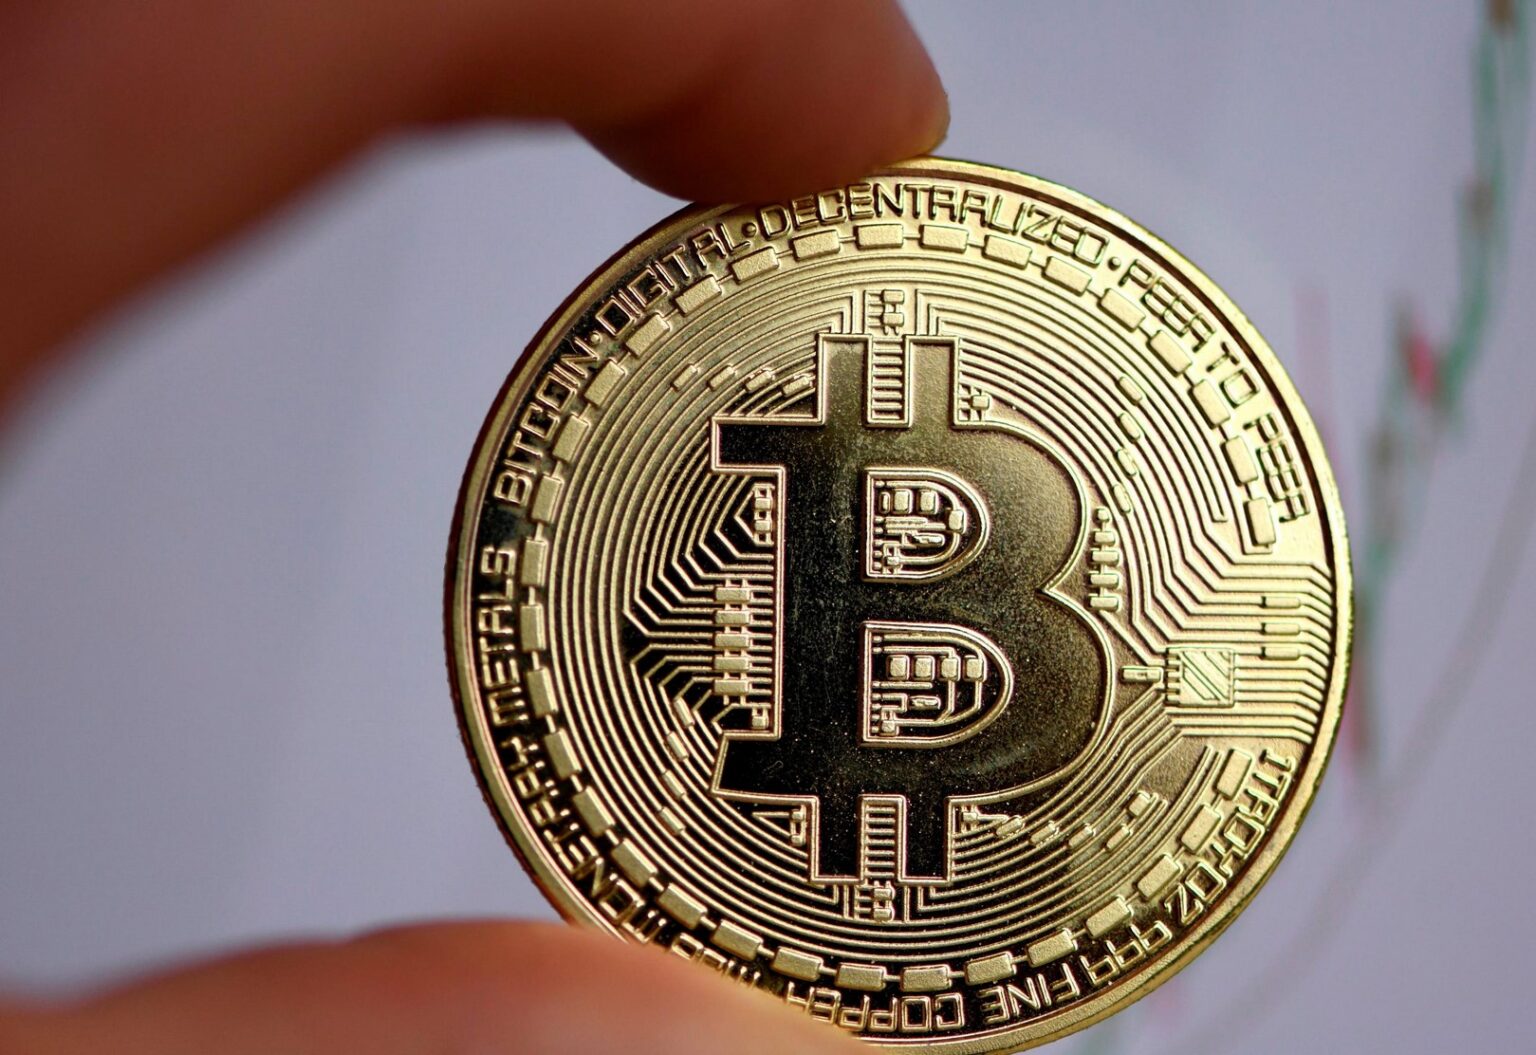 mining bitcoins worth it-2021 form